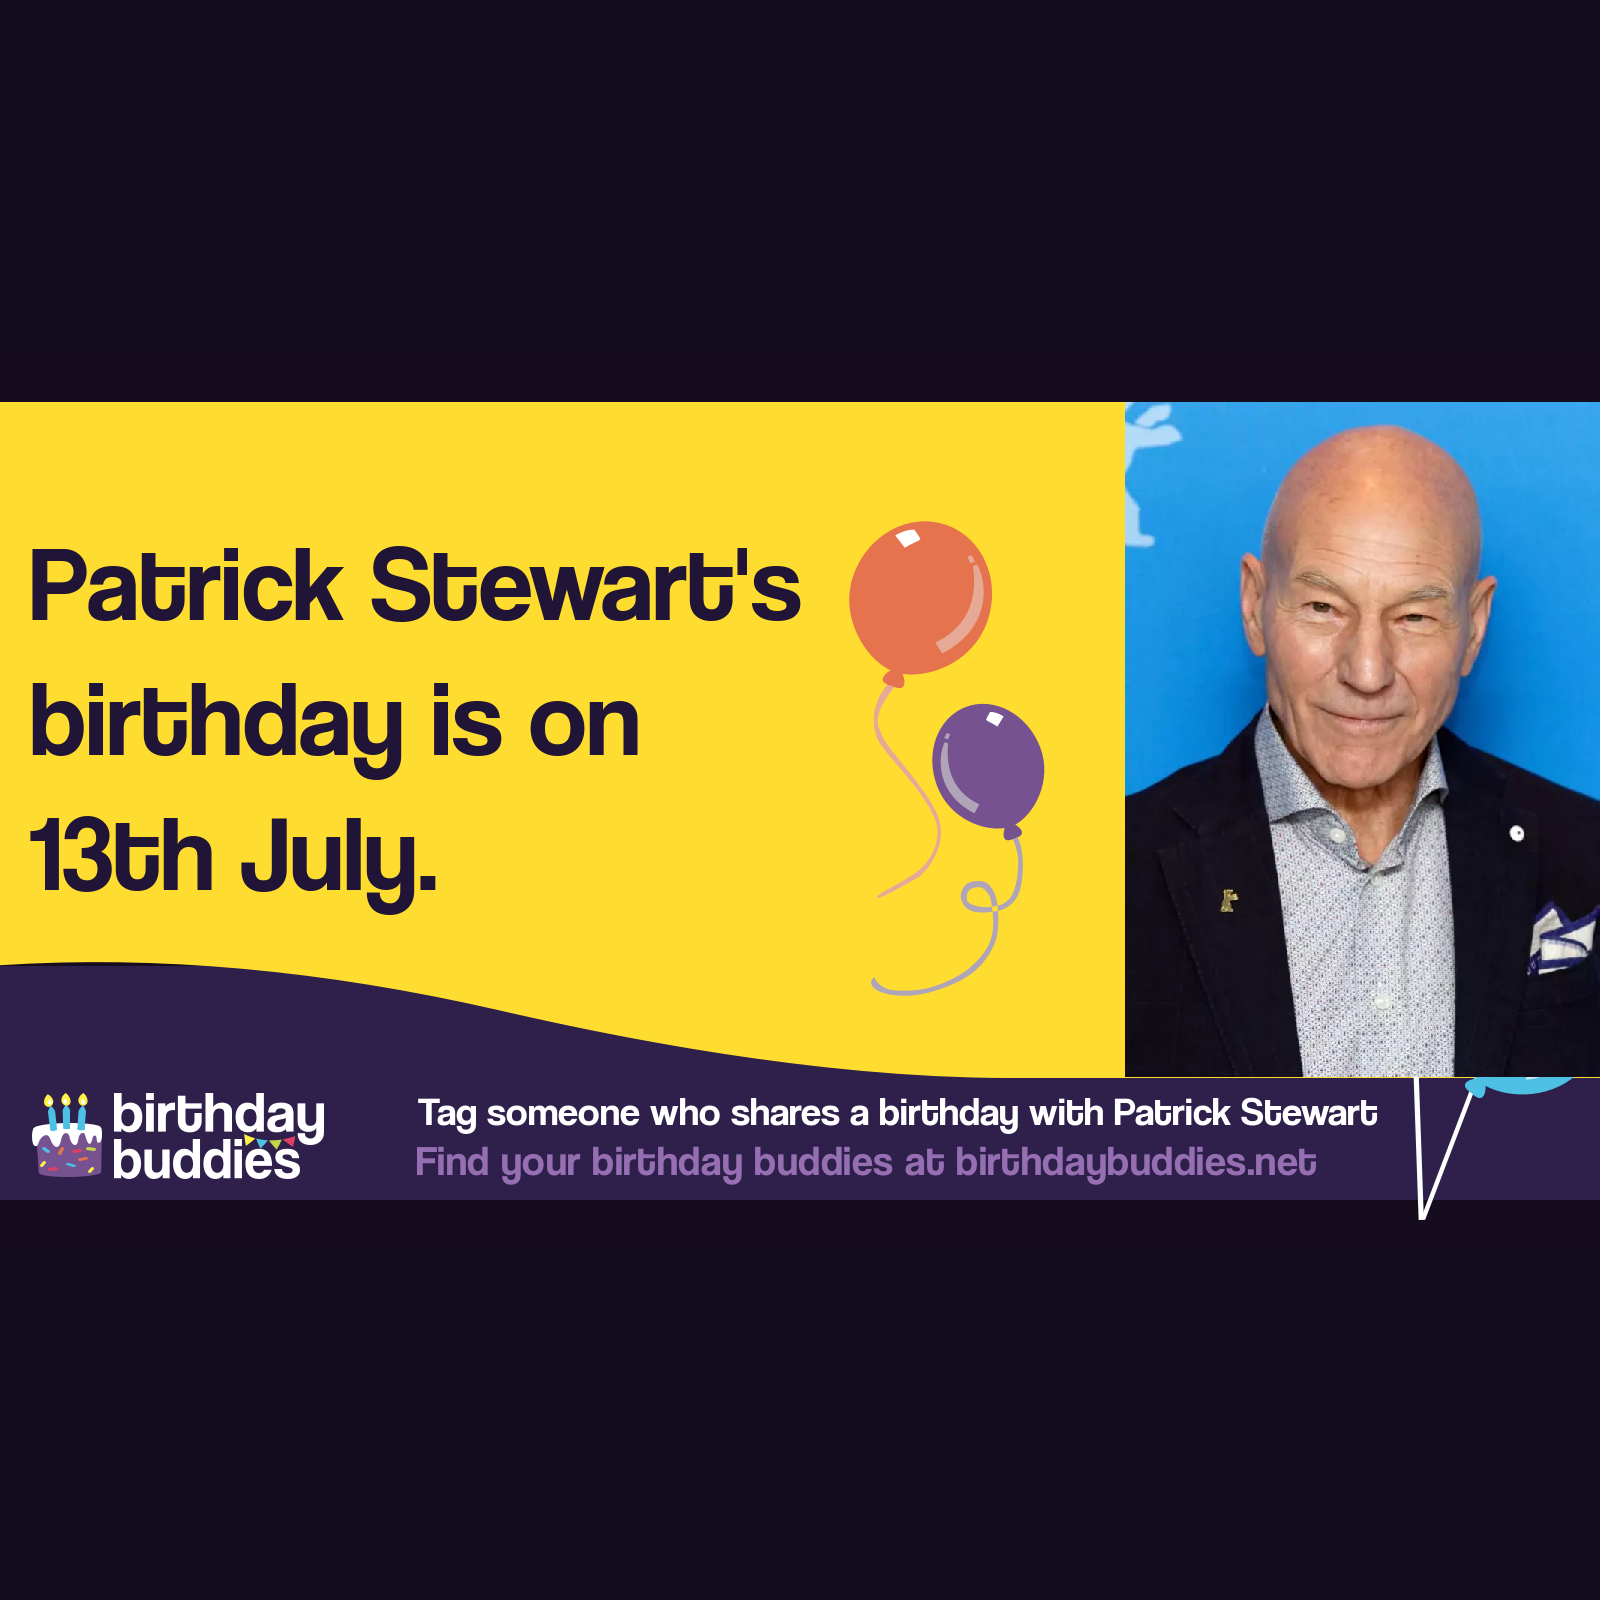 Patrick Stewart's birthday is 13th July 1940